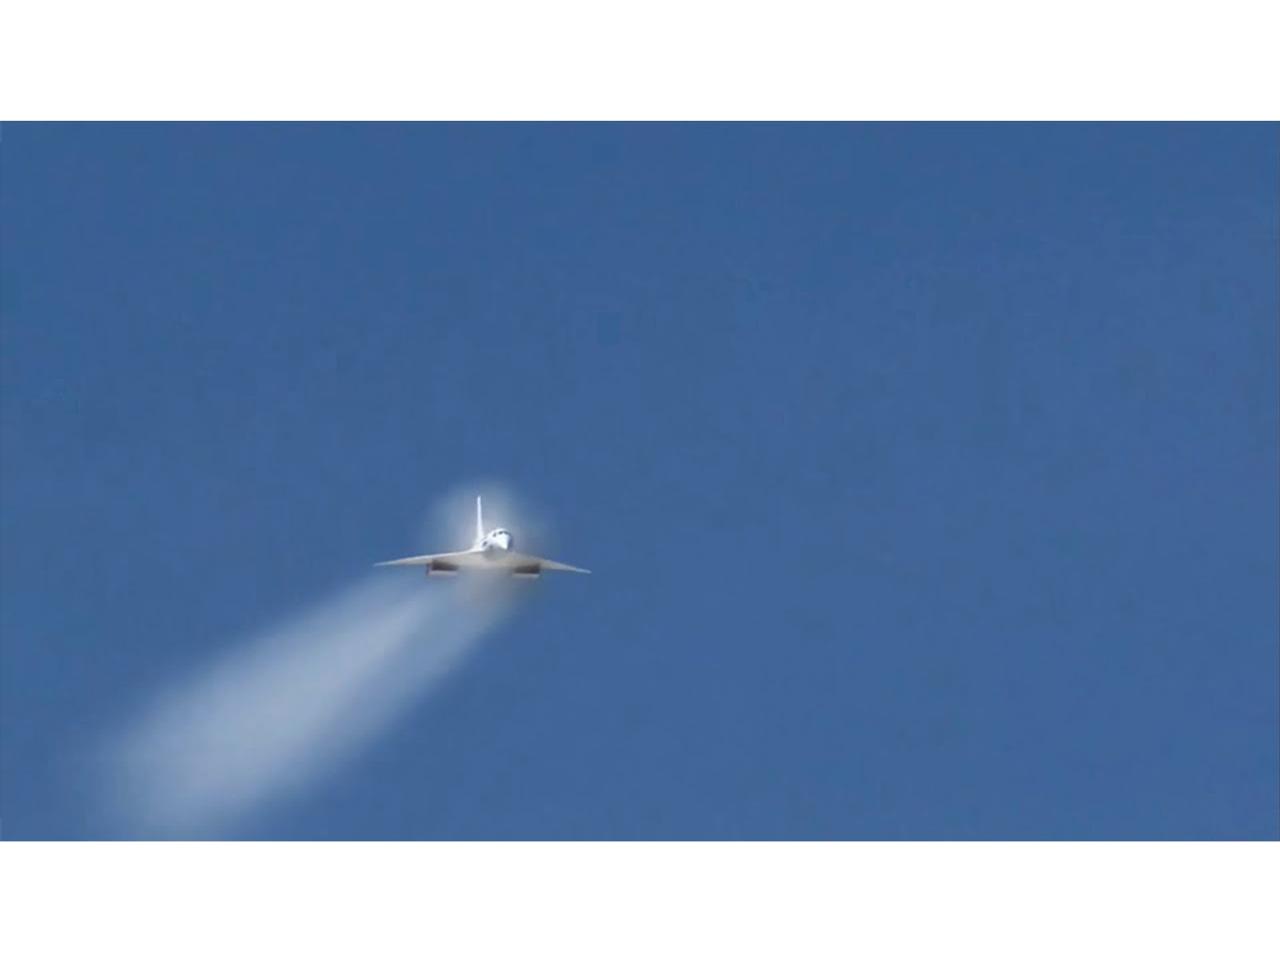 NASAとロッキード・マーティンが開発中。マッハ1.4、高度16kmを静かに飛ぶ超音速旅客機｢QueSST X-plane｣